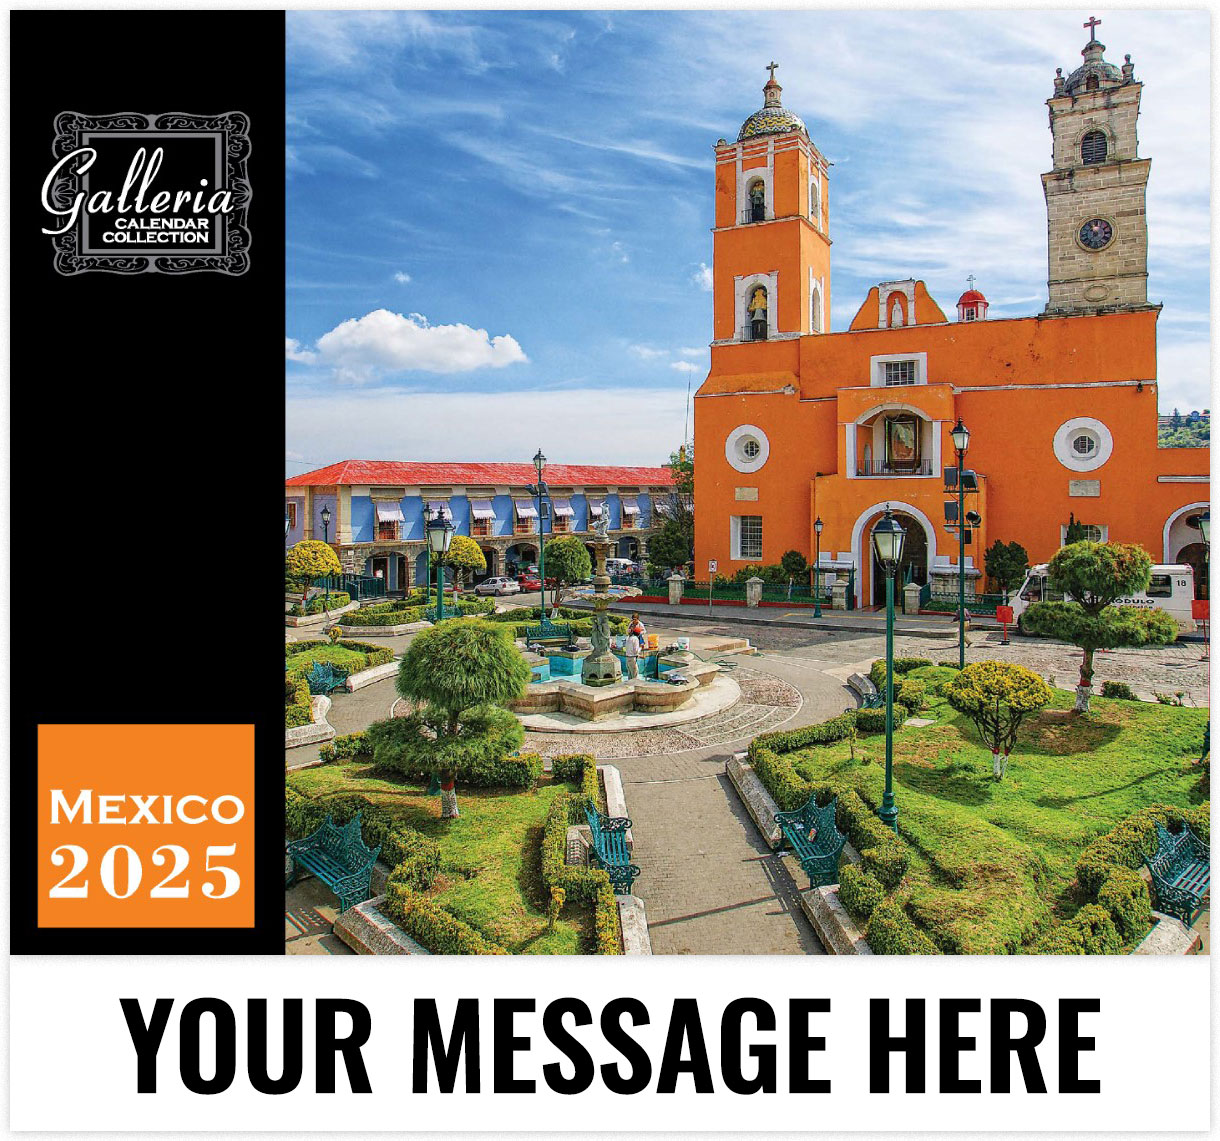 Galleria Scenes Mexico (English/Spanish) - 2025